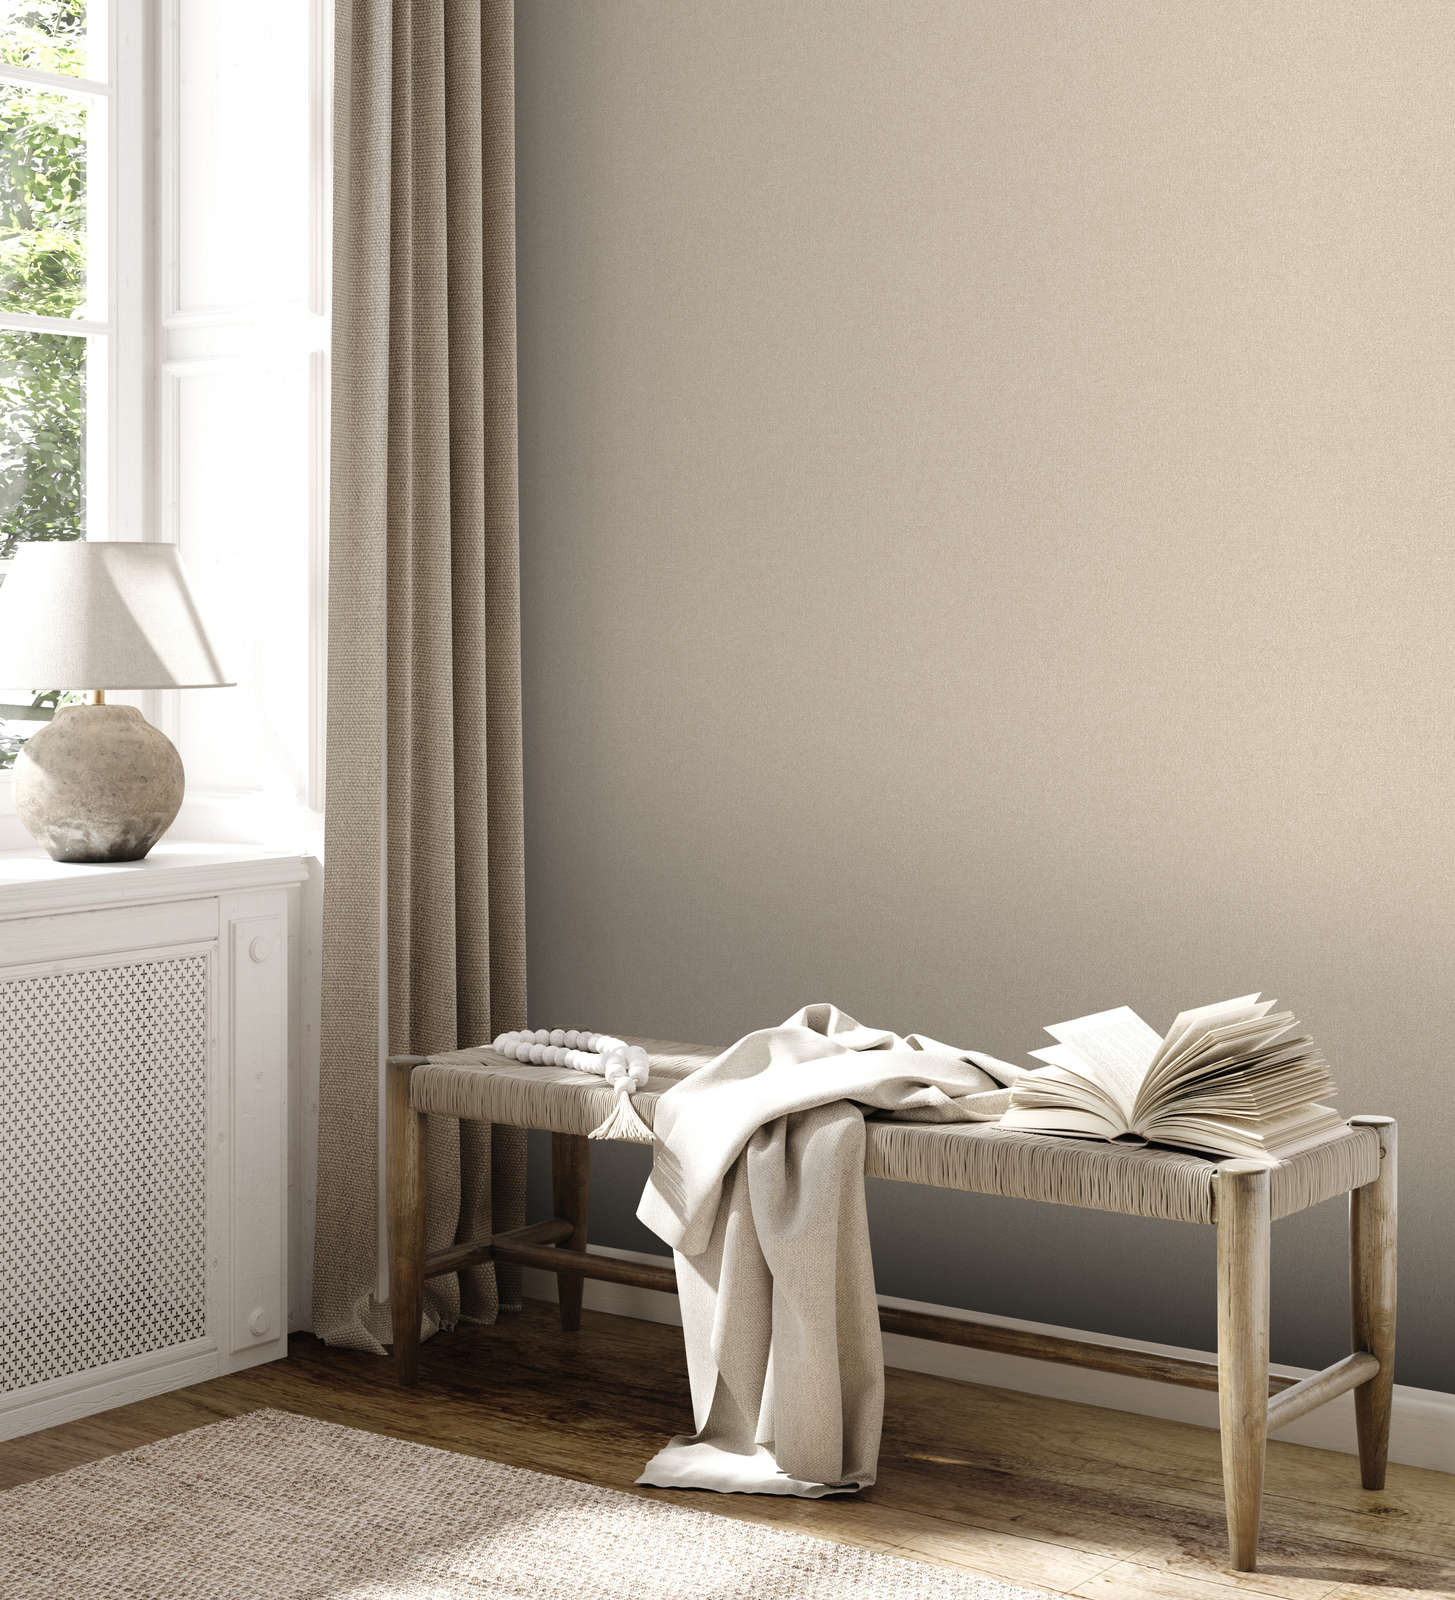             Non-woven wallpaper plains with fine structure - beige
        